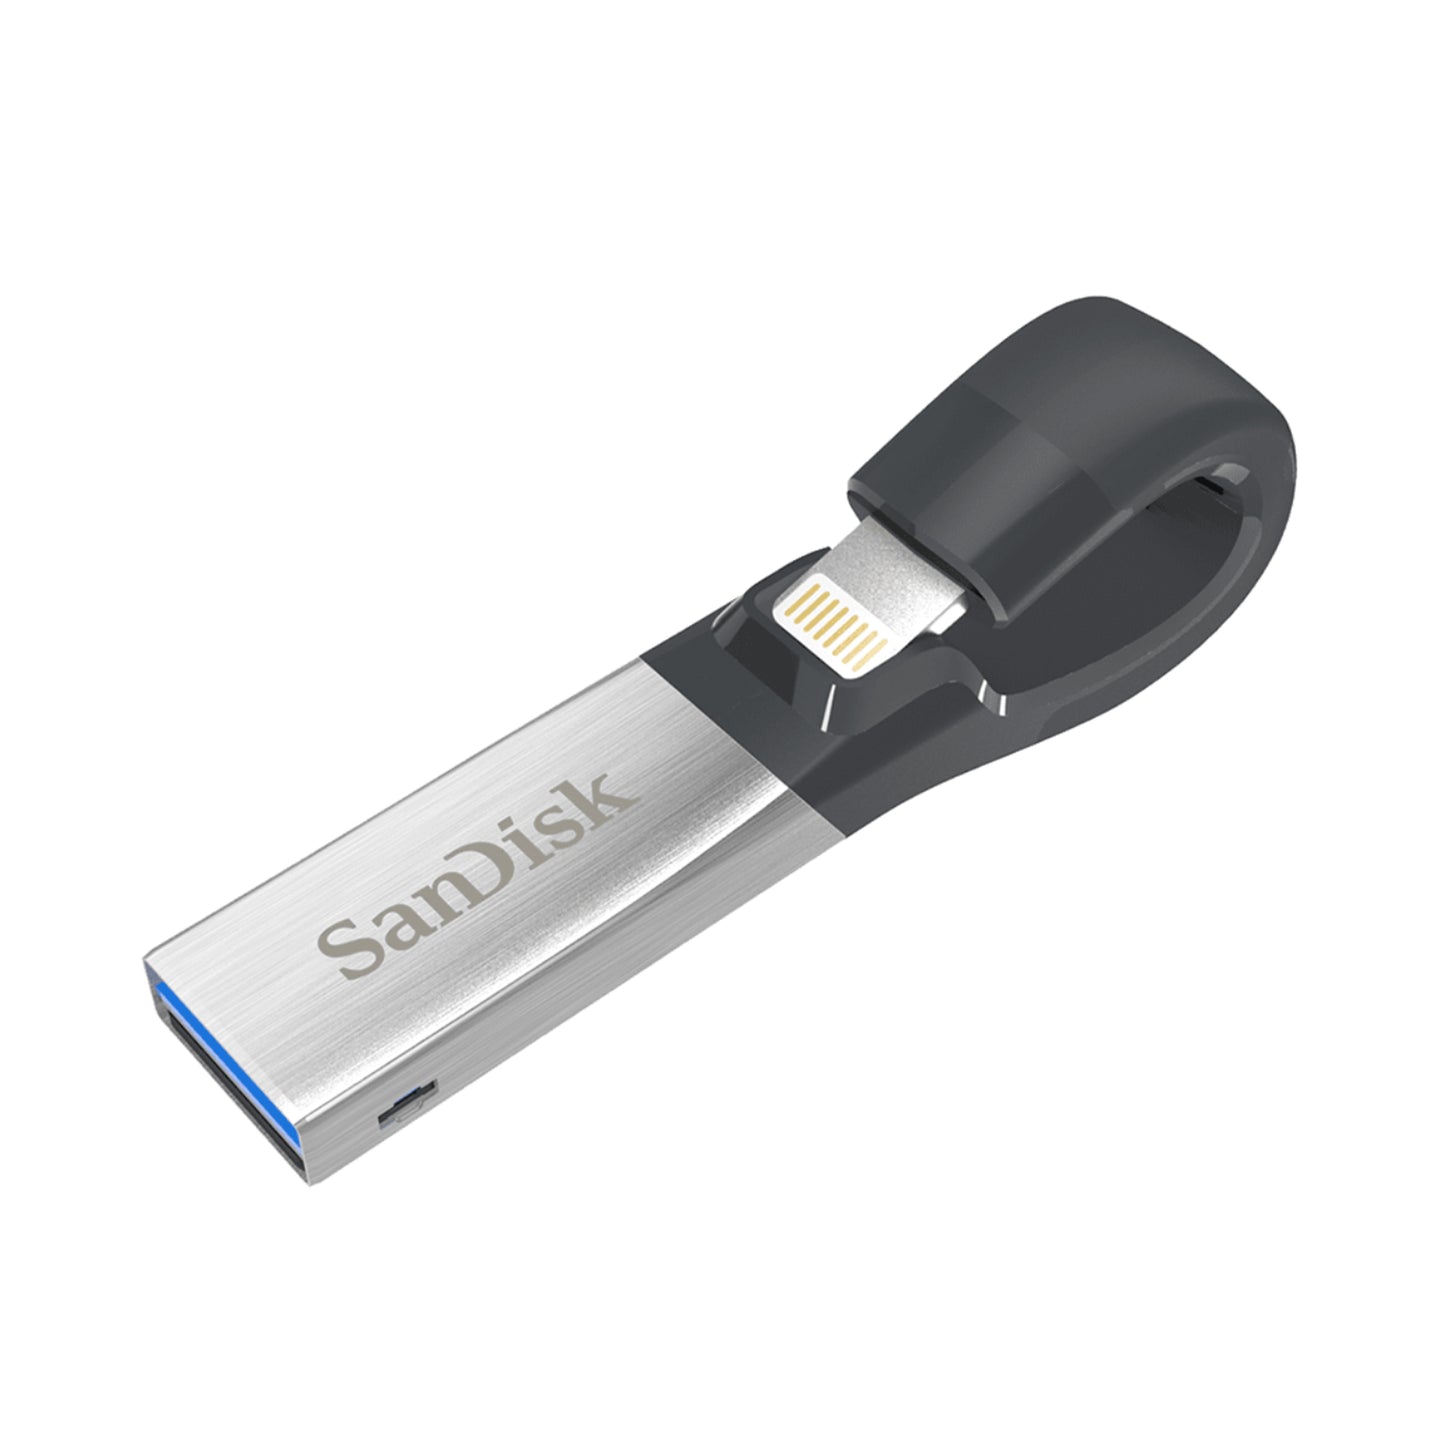 SANDISK iXpand Version 2 OTG Flash Drive (16gb) - Silver/Black